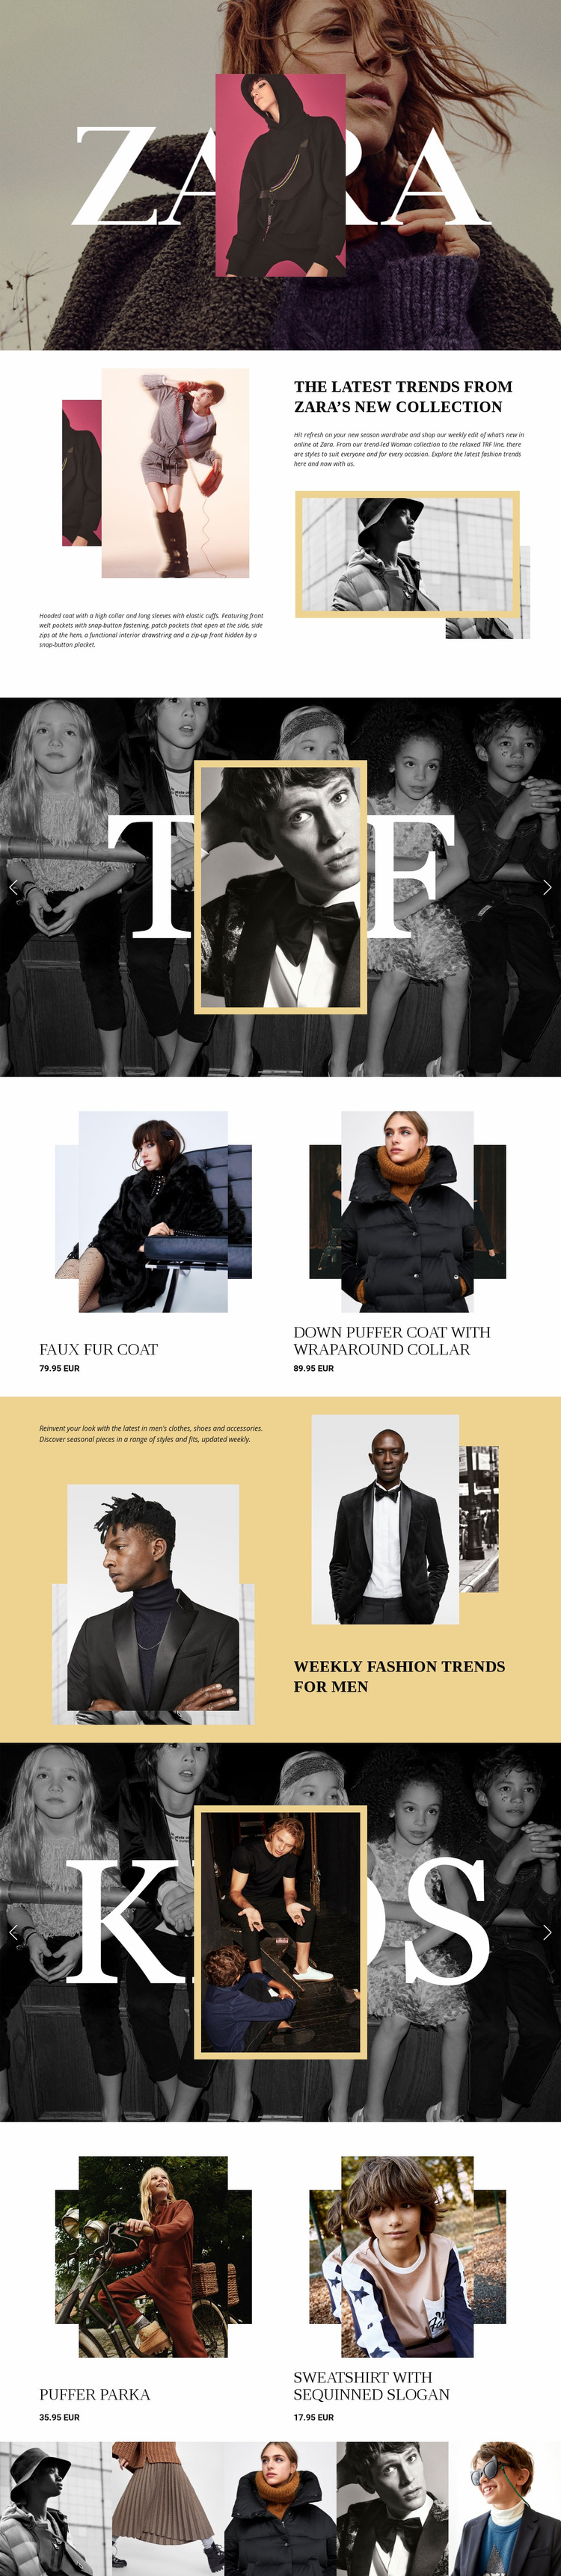 Zara Web Page Design